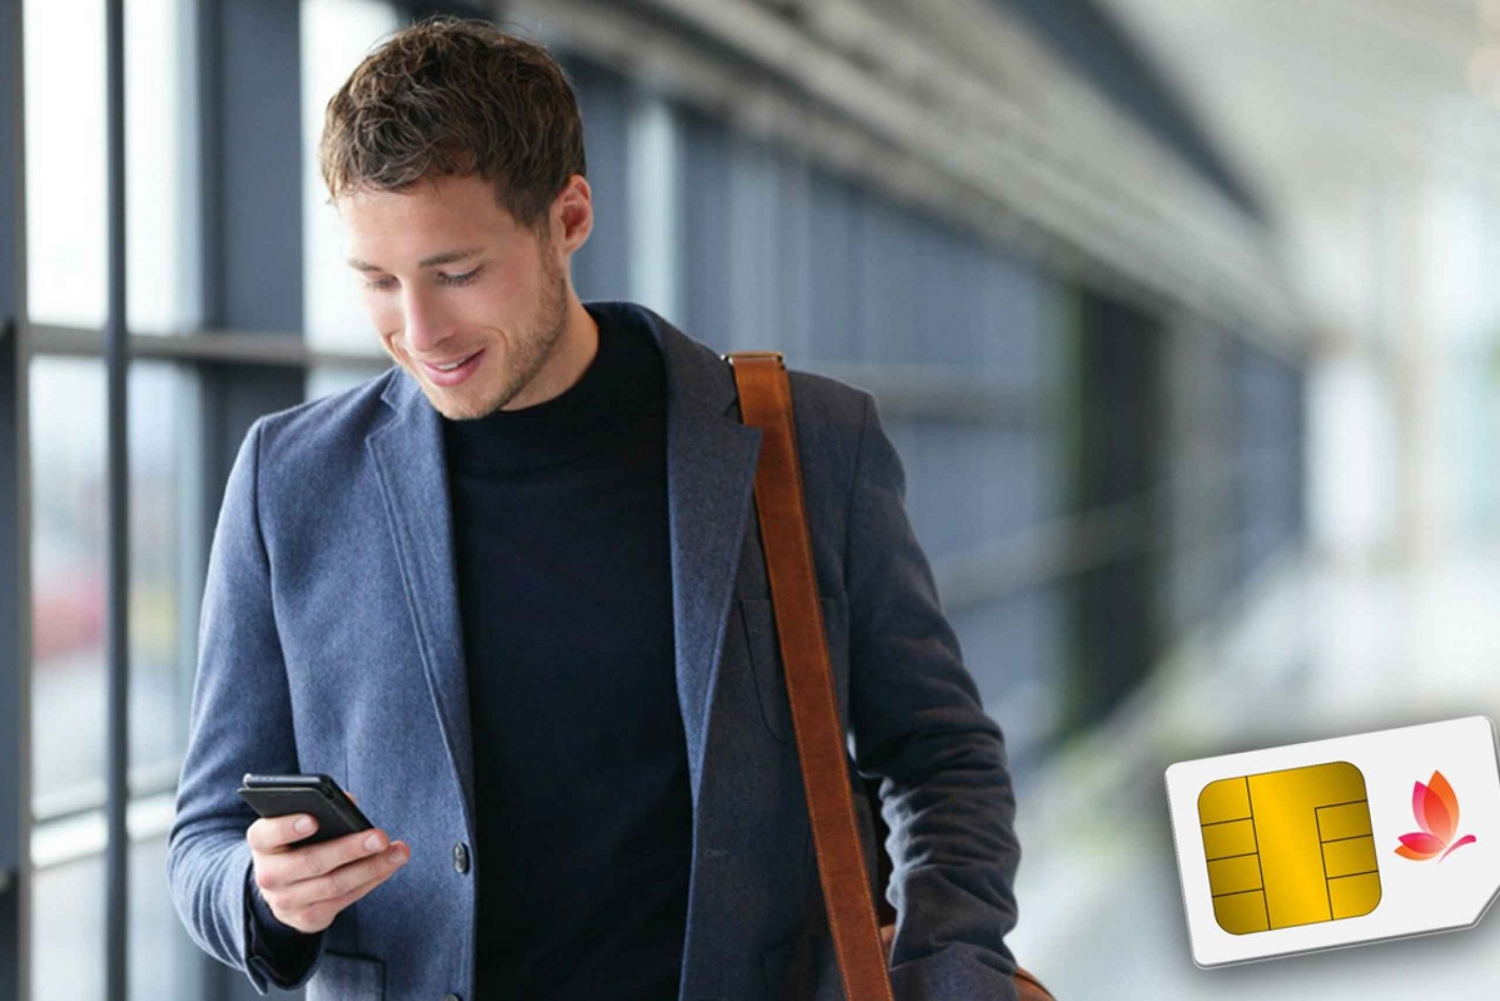 Dubai Airport: 5G/4G Tourist SIM Card for UAE Data and Calls